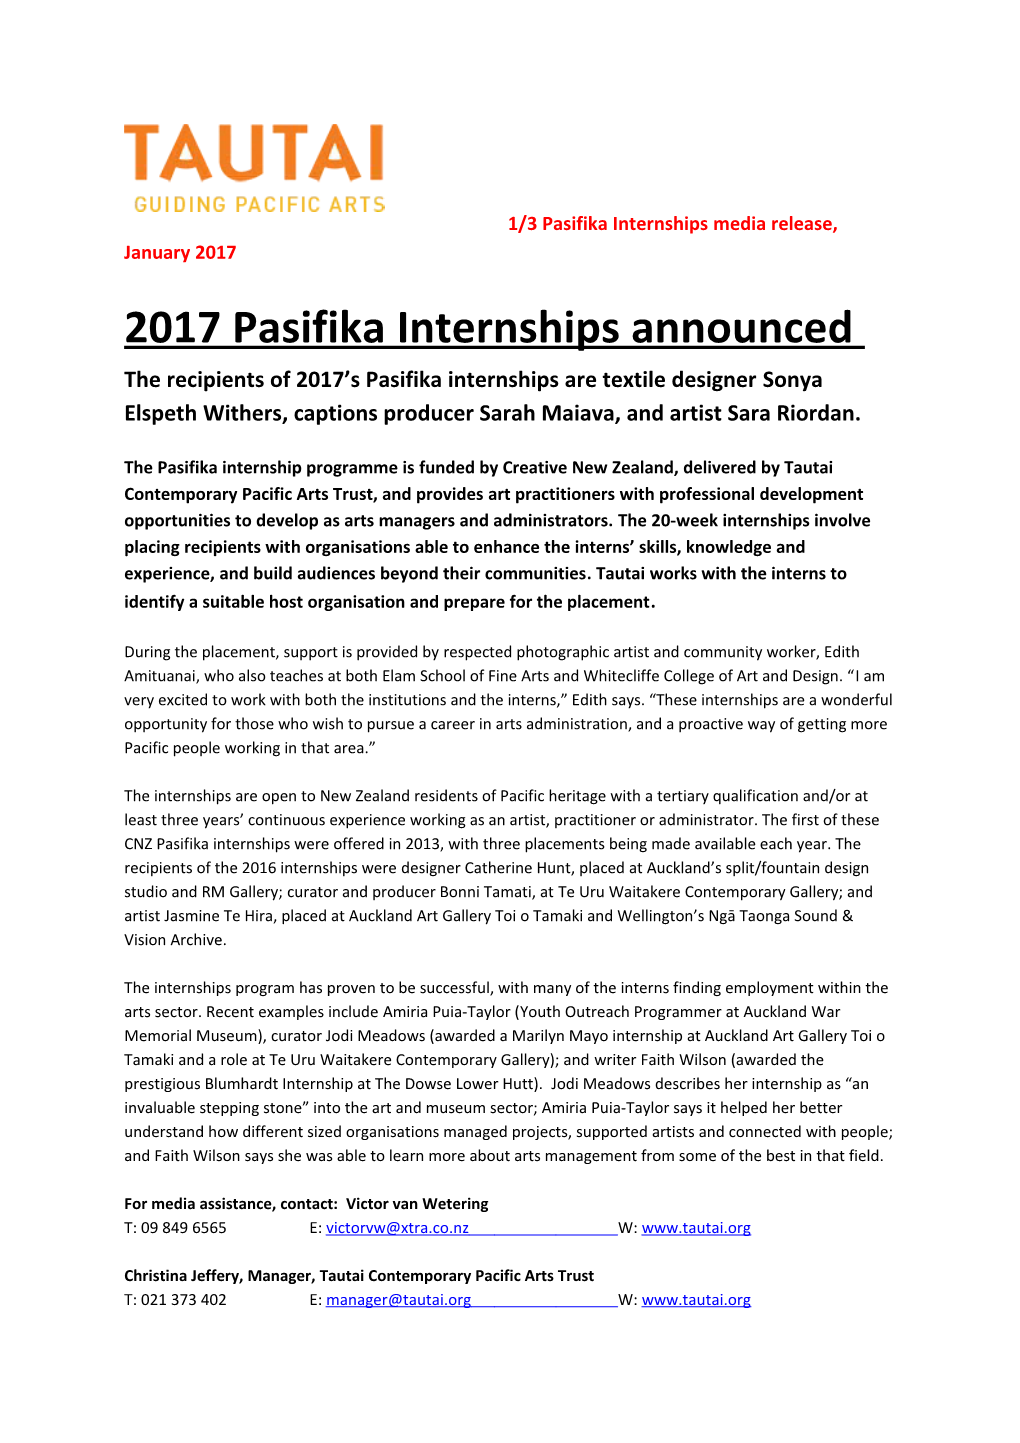 2017 Pasifika Internships Announced